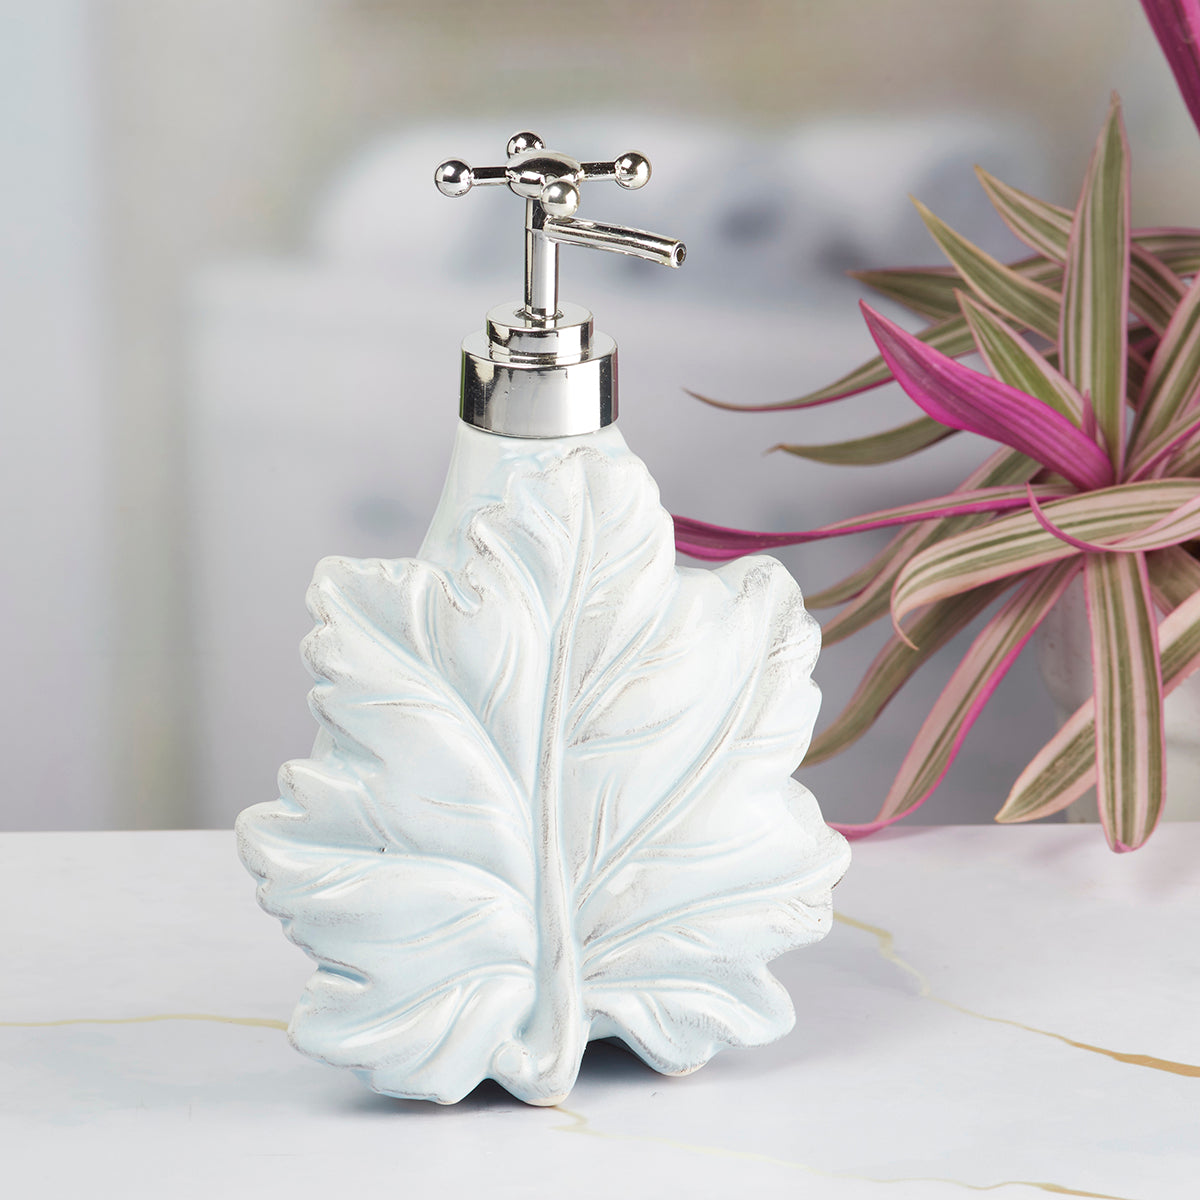 Ceramic Soap Dispenser Pump for Bathroom for Bath Gel, Lotion, Shampoo (8635)